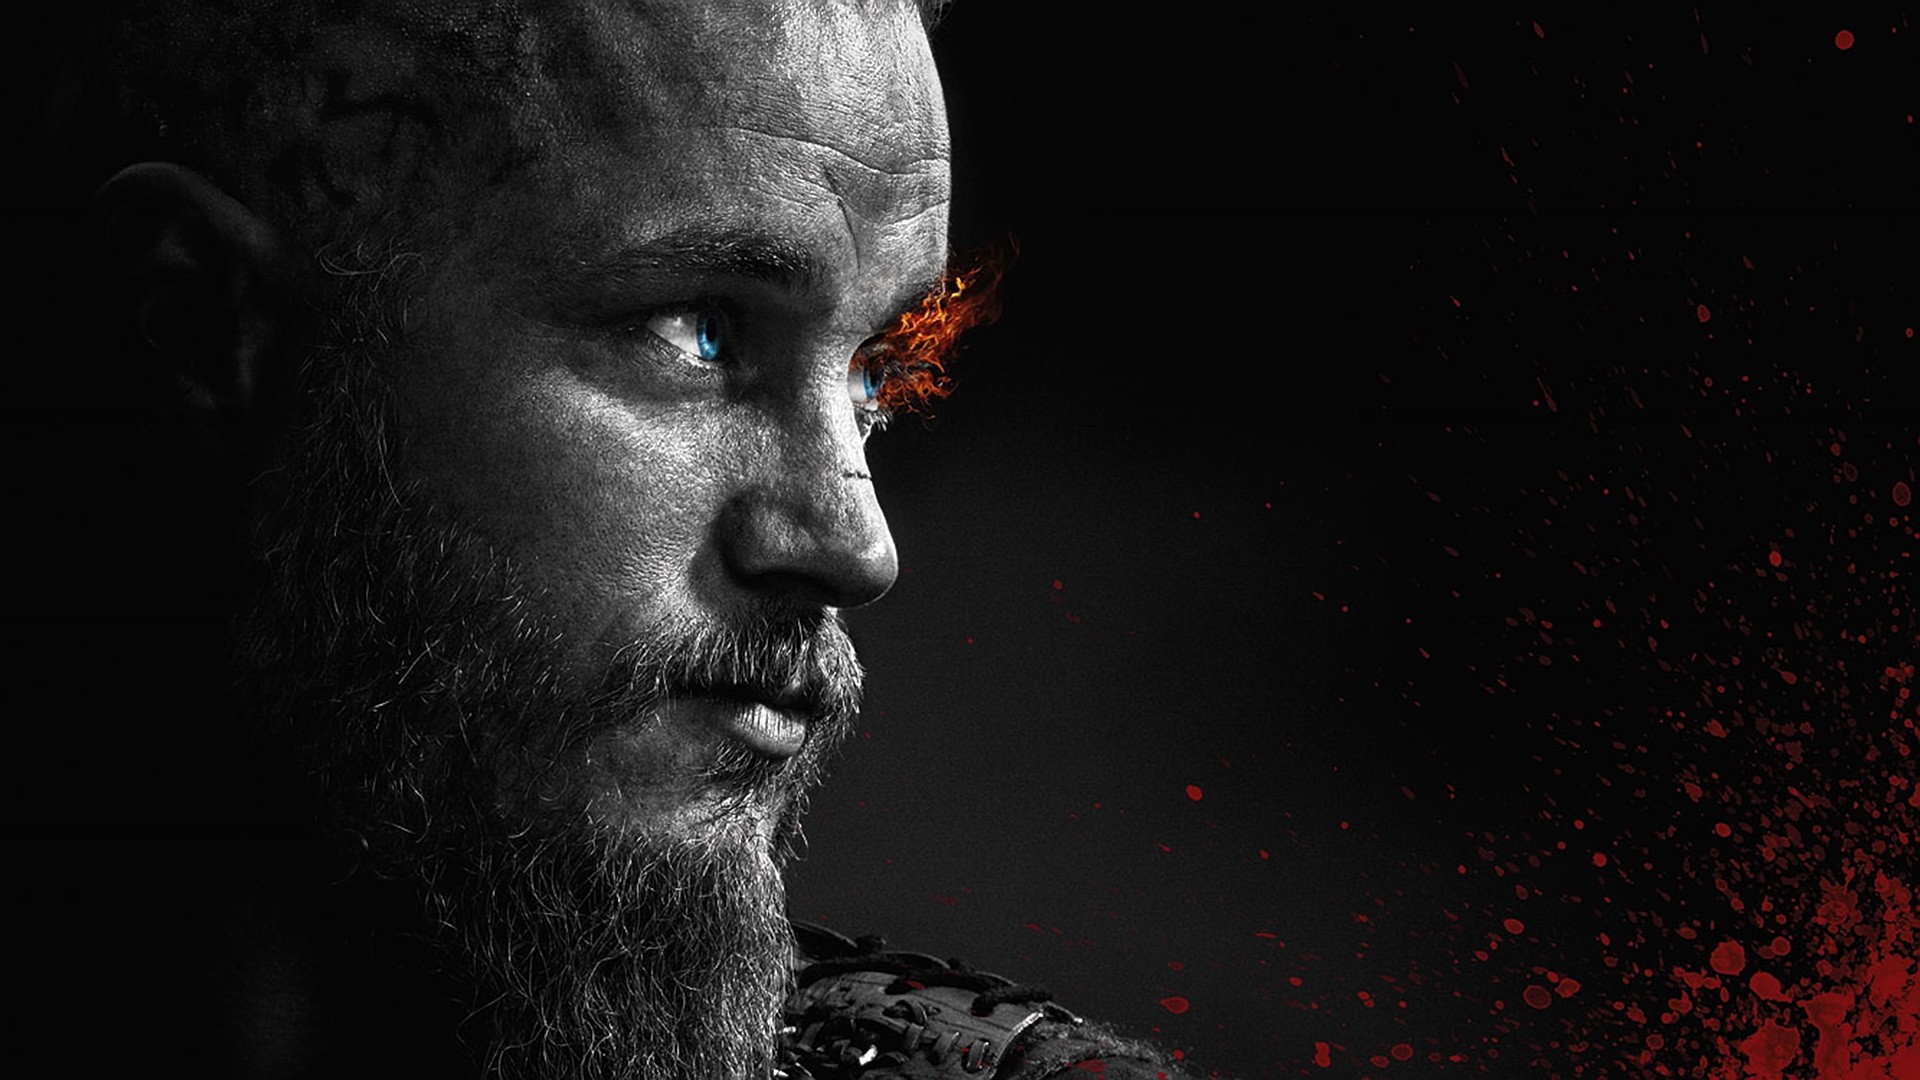 Ragnar Lodbrok Vikings TV Fire Monochrome Selective Coloring Blue Eyes Dark Face Men Beards Eyes Red 1920x1080